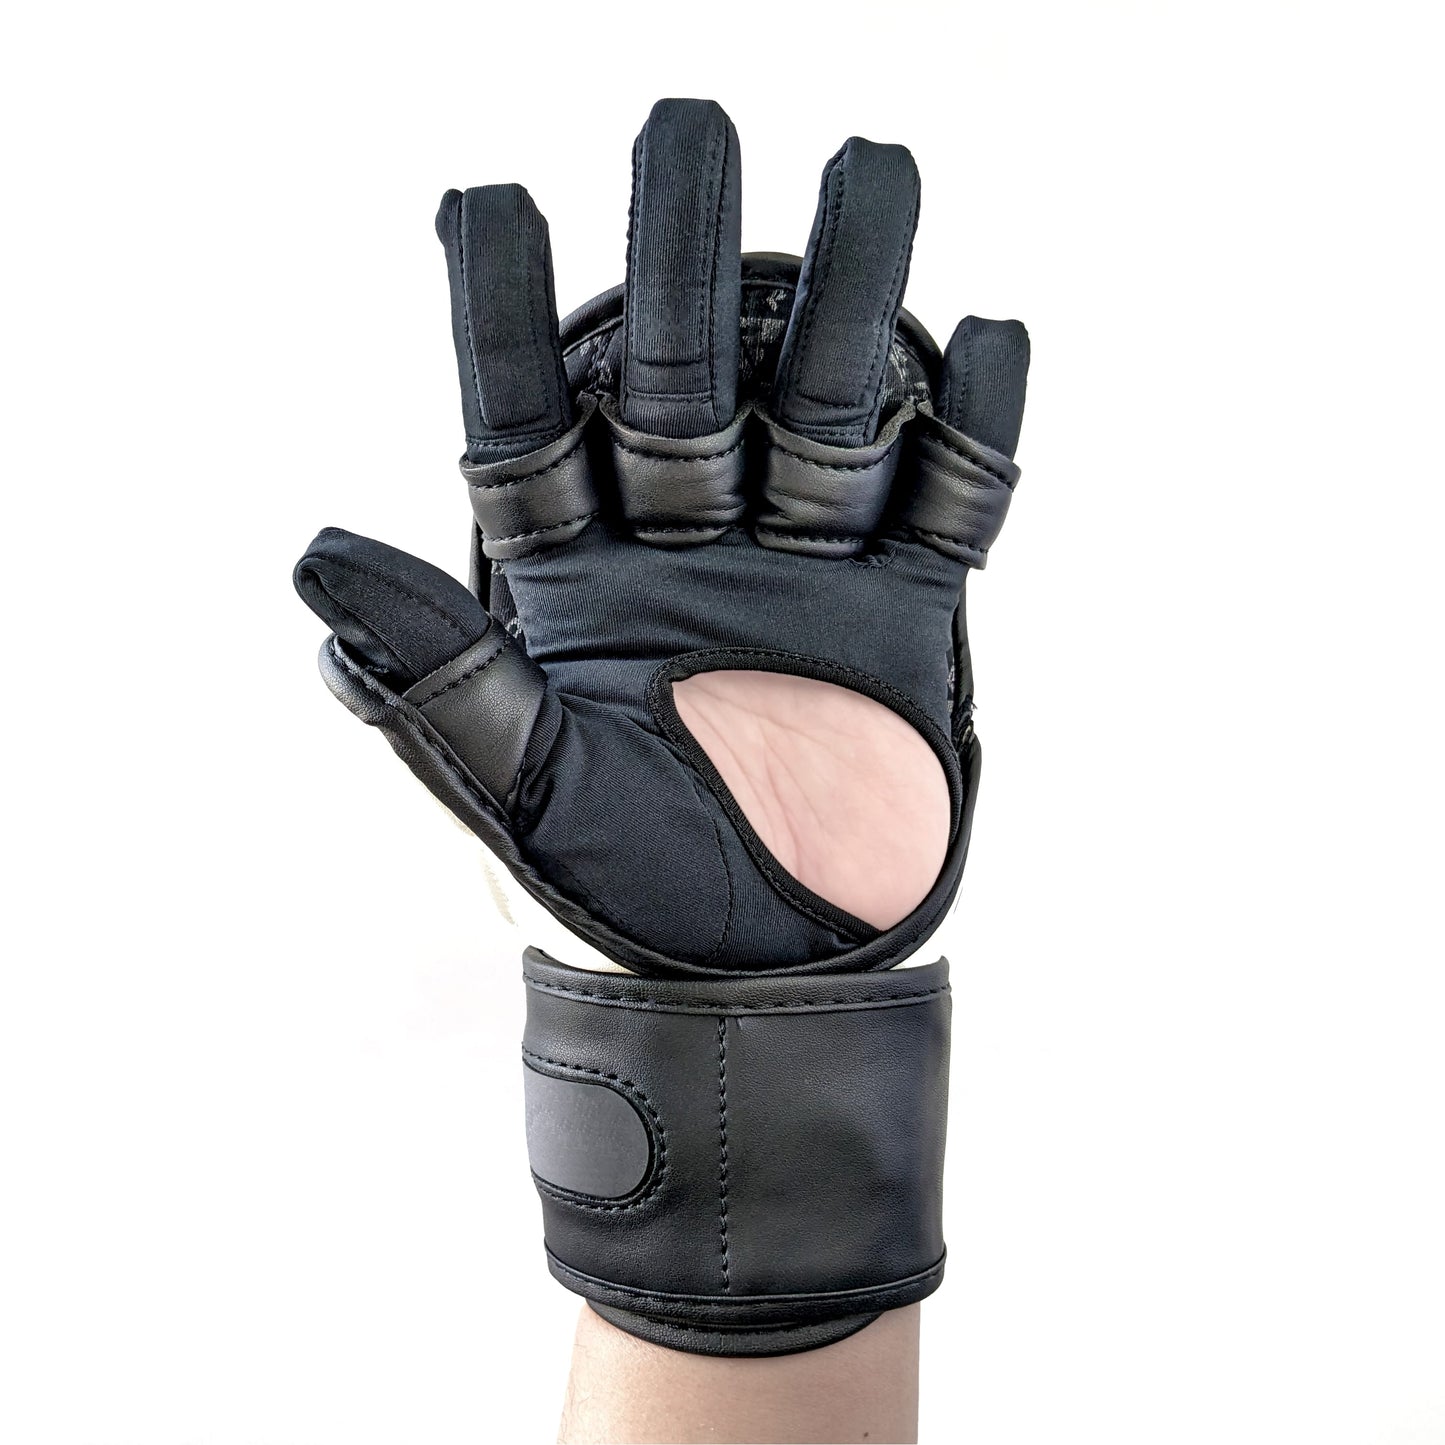 SPARS - SET OF TWO - Eye Pokes Prevention Gloves - UNISEX